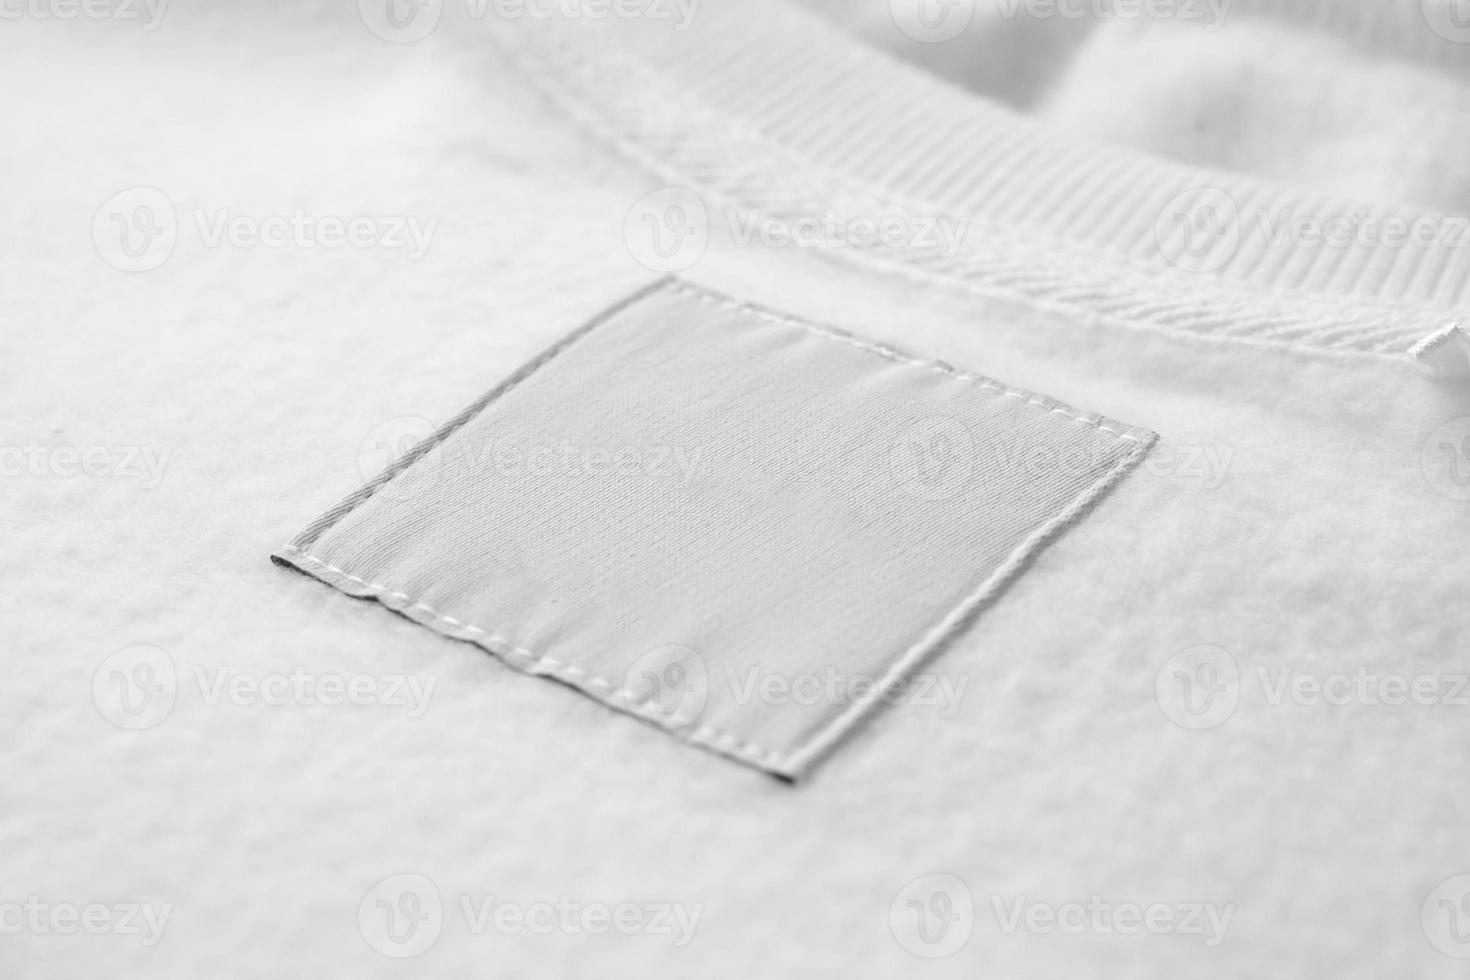 etiqueta de roupas de lavanderia branca em branco no fundo de textura de tecido foto